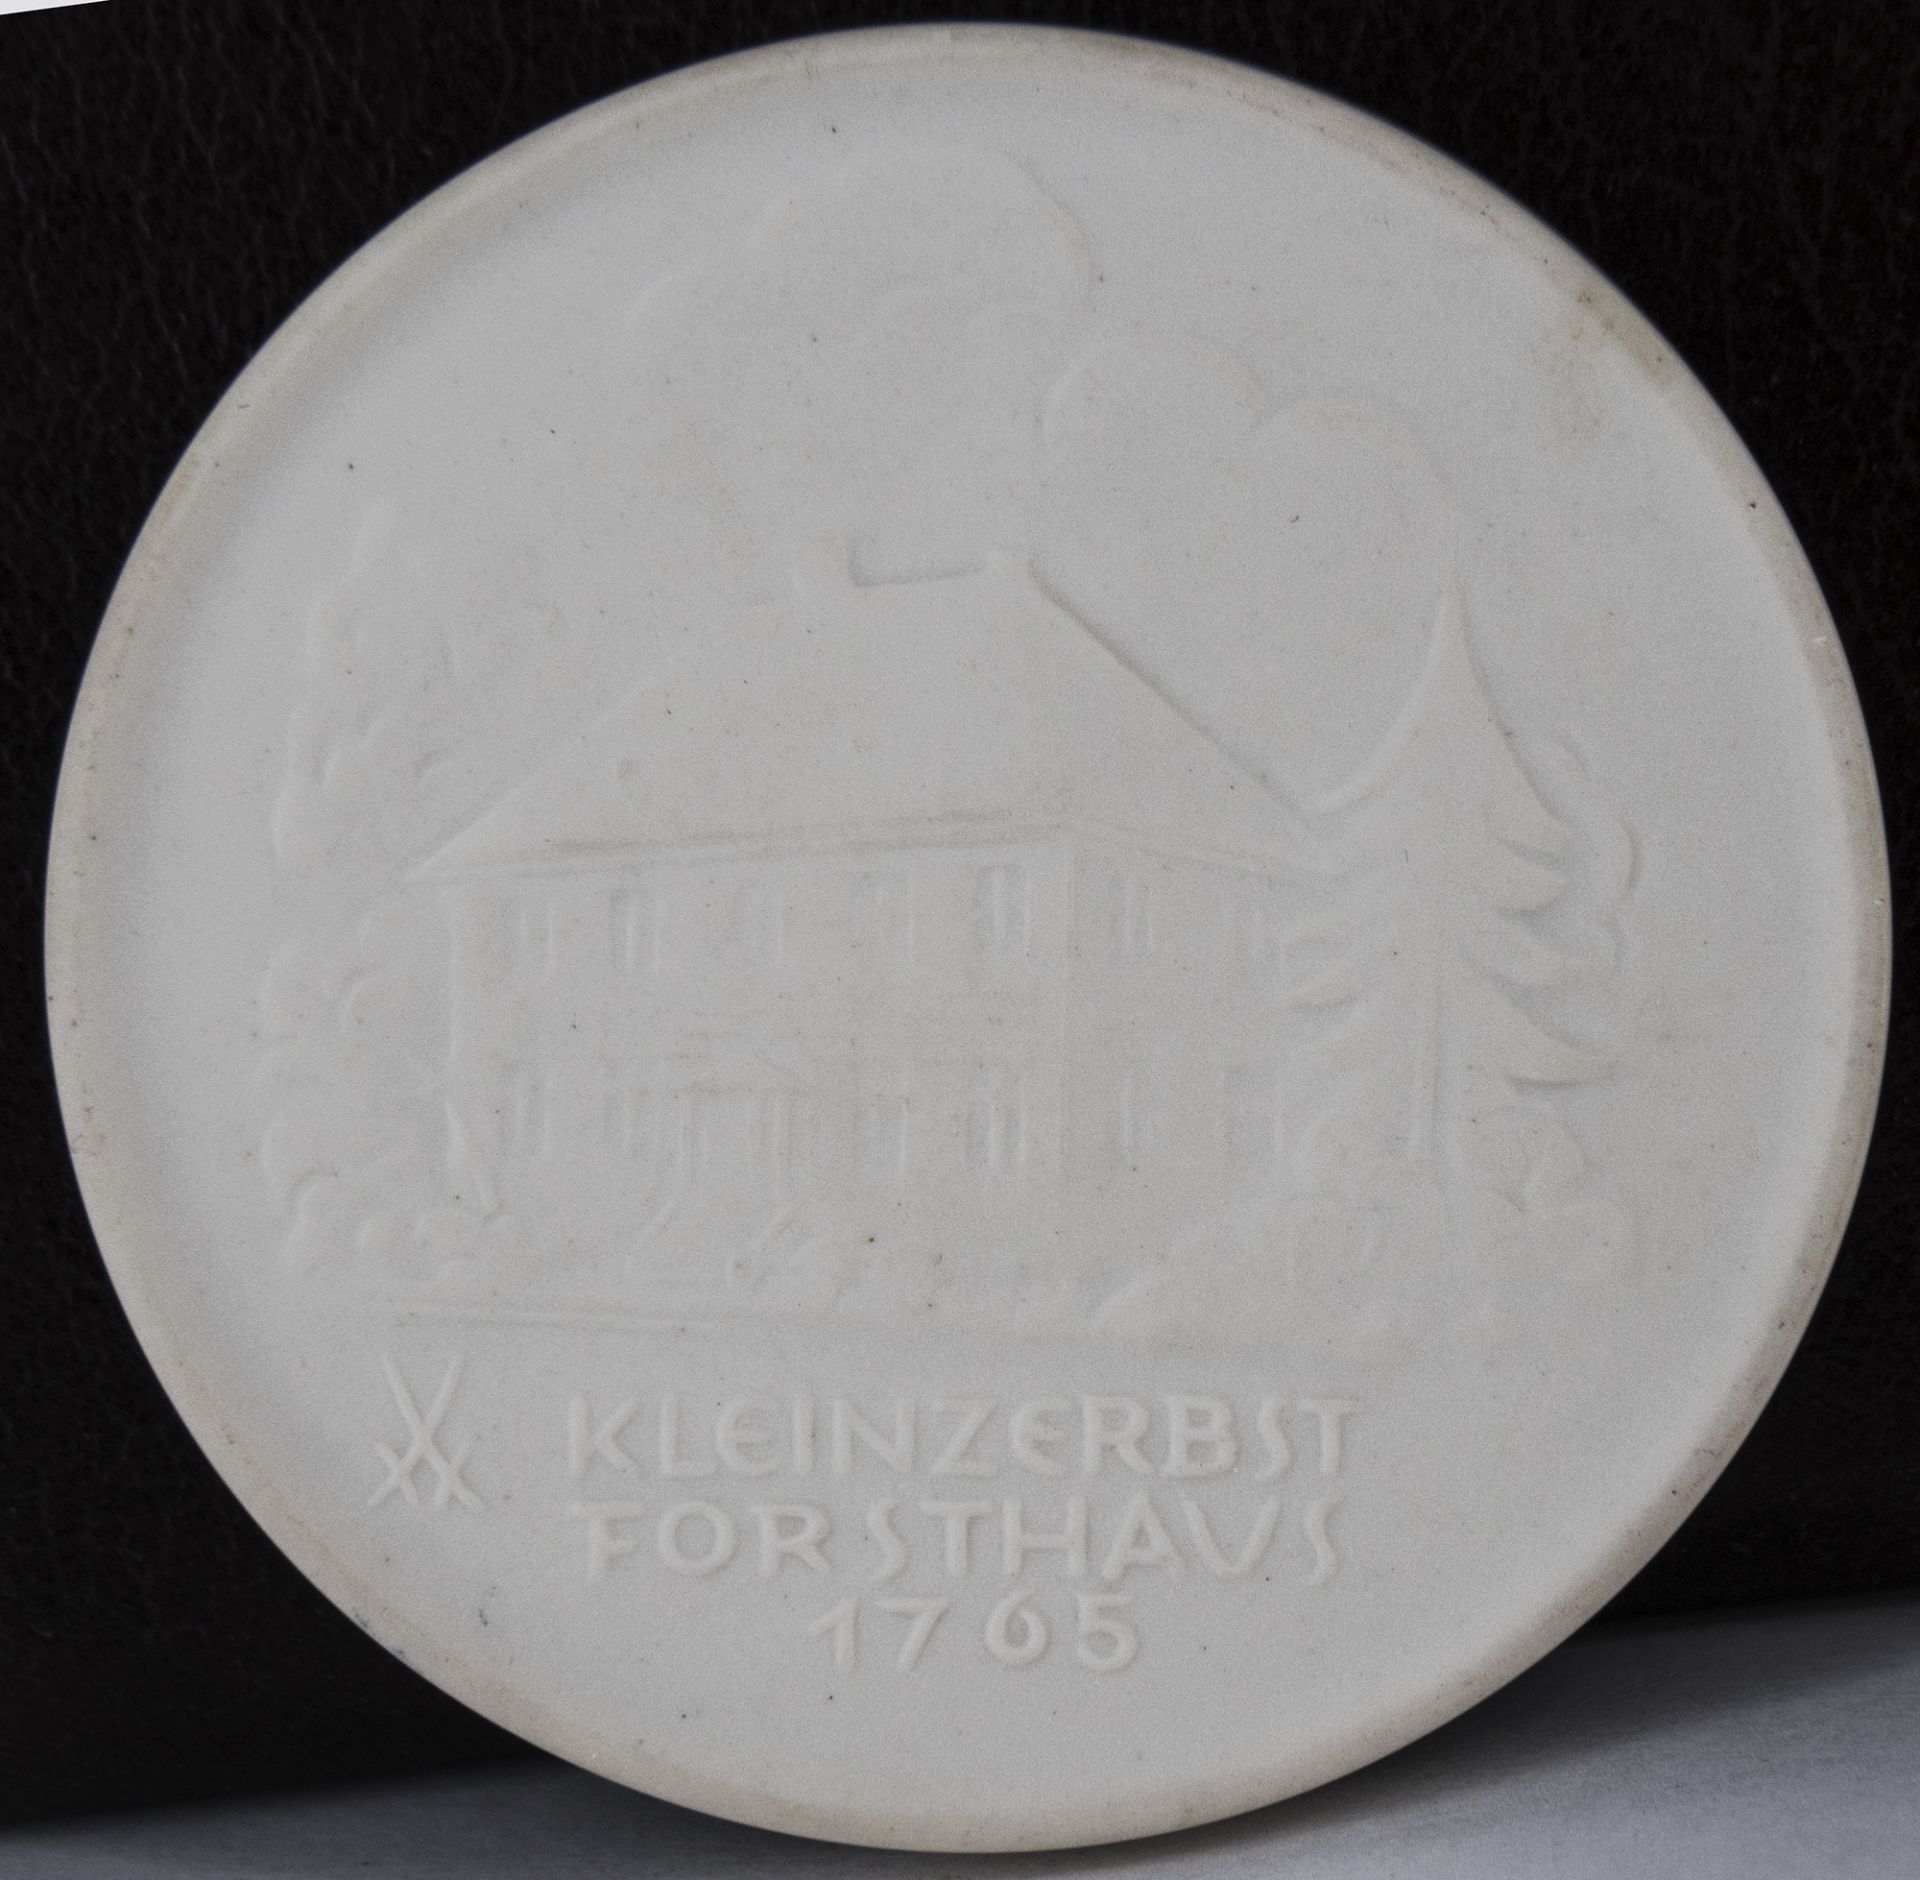 Porzellan - Medaille "Carl Andreas Naumann 1786 - 1854 - Kleinzerbst Forsthaus 1765", Meißen, - Image 2 of 2